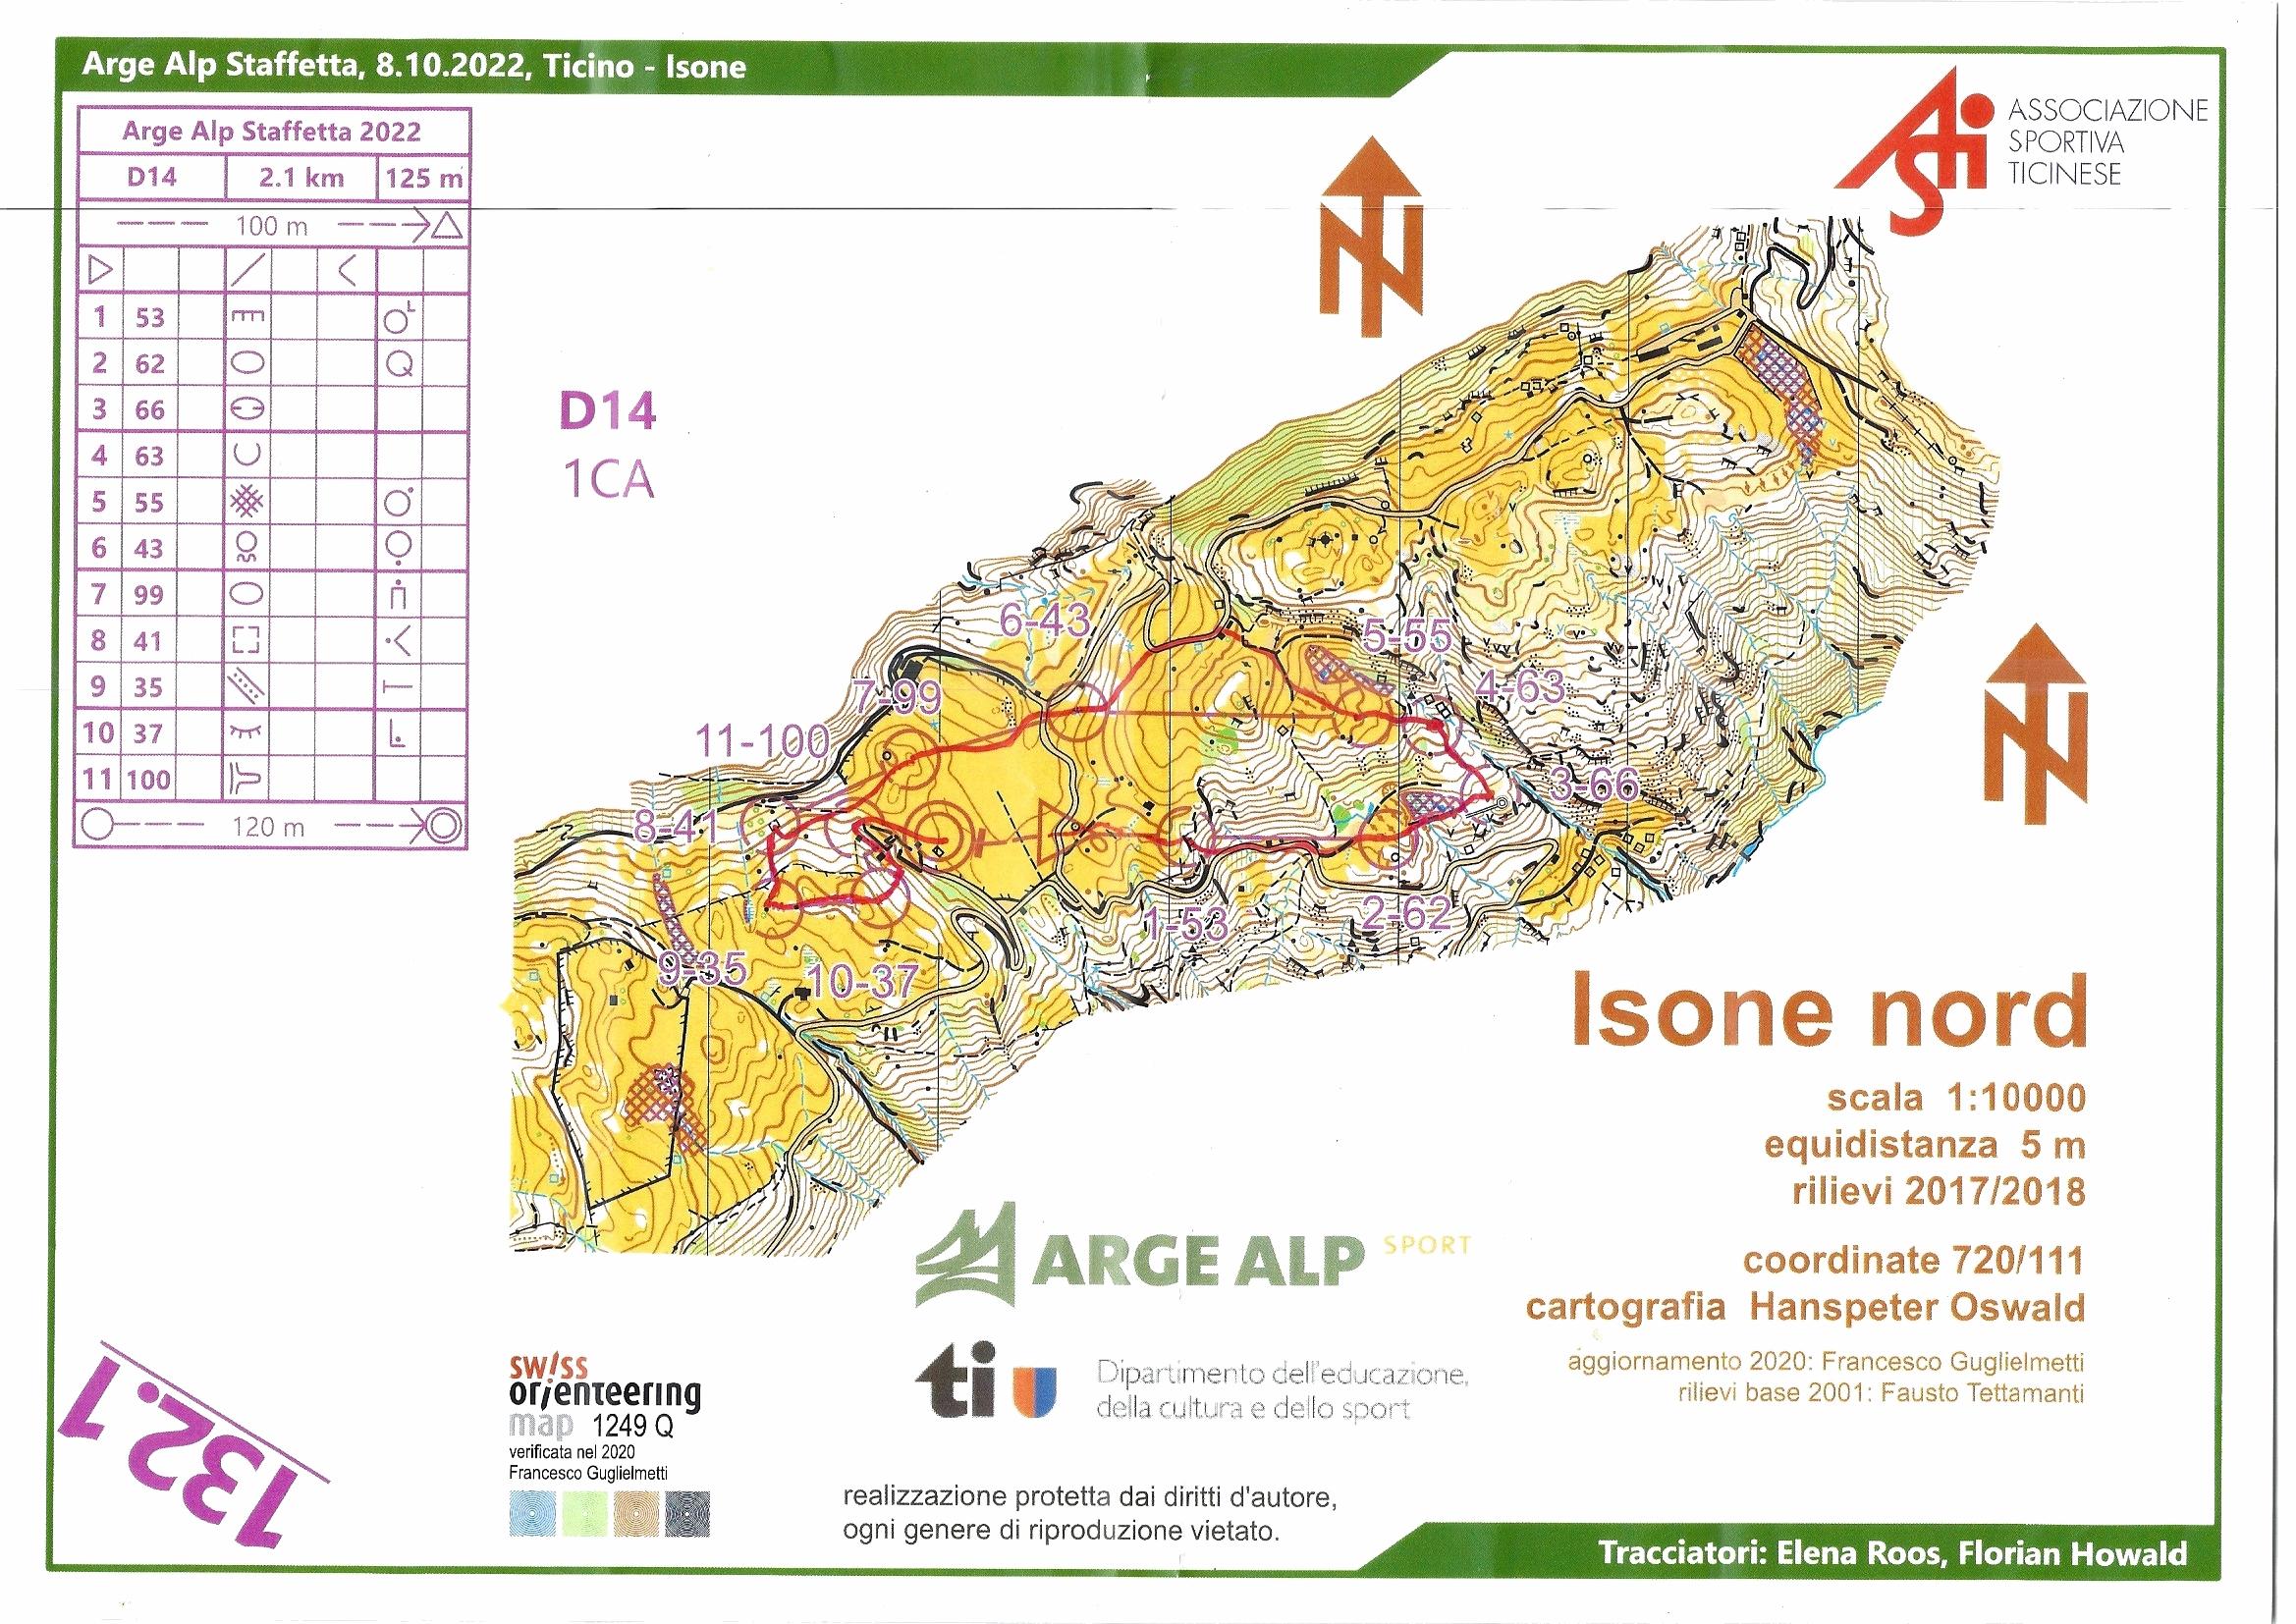 Arge Alp 2022 Isone - Staffel (08-10-2022)